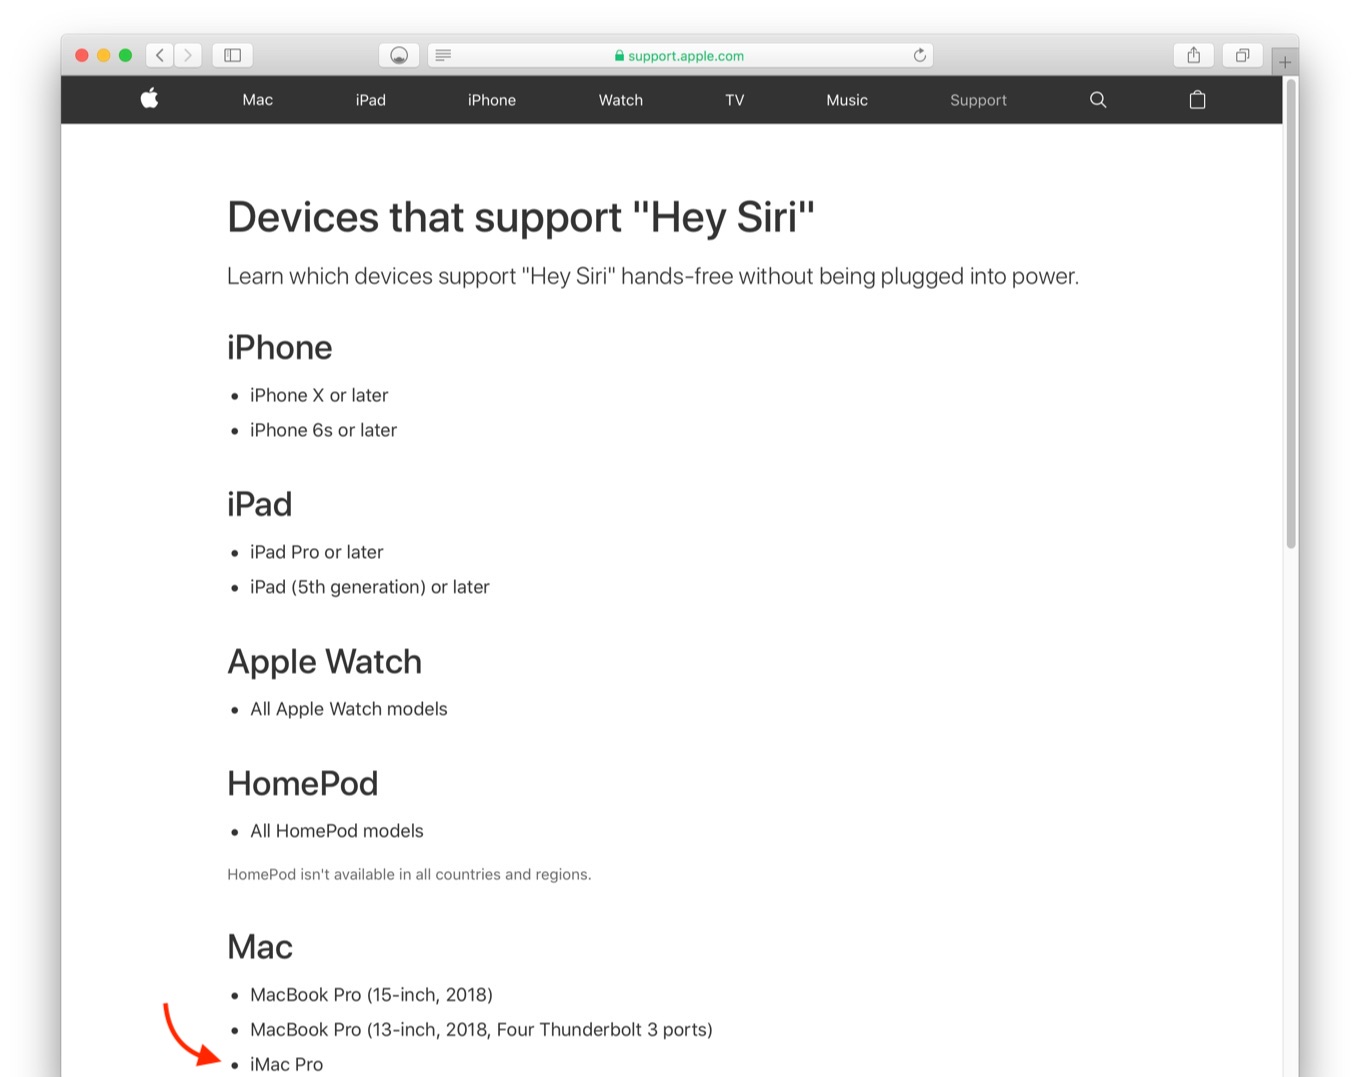 Hey Siri support iMac Pro